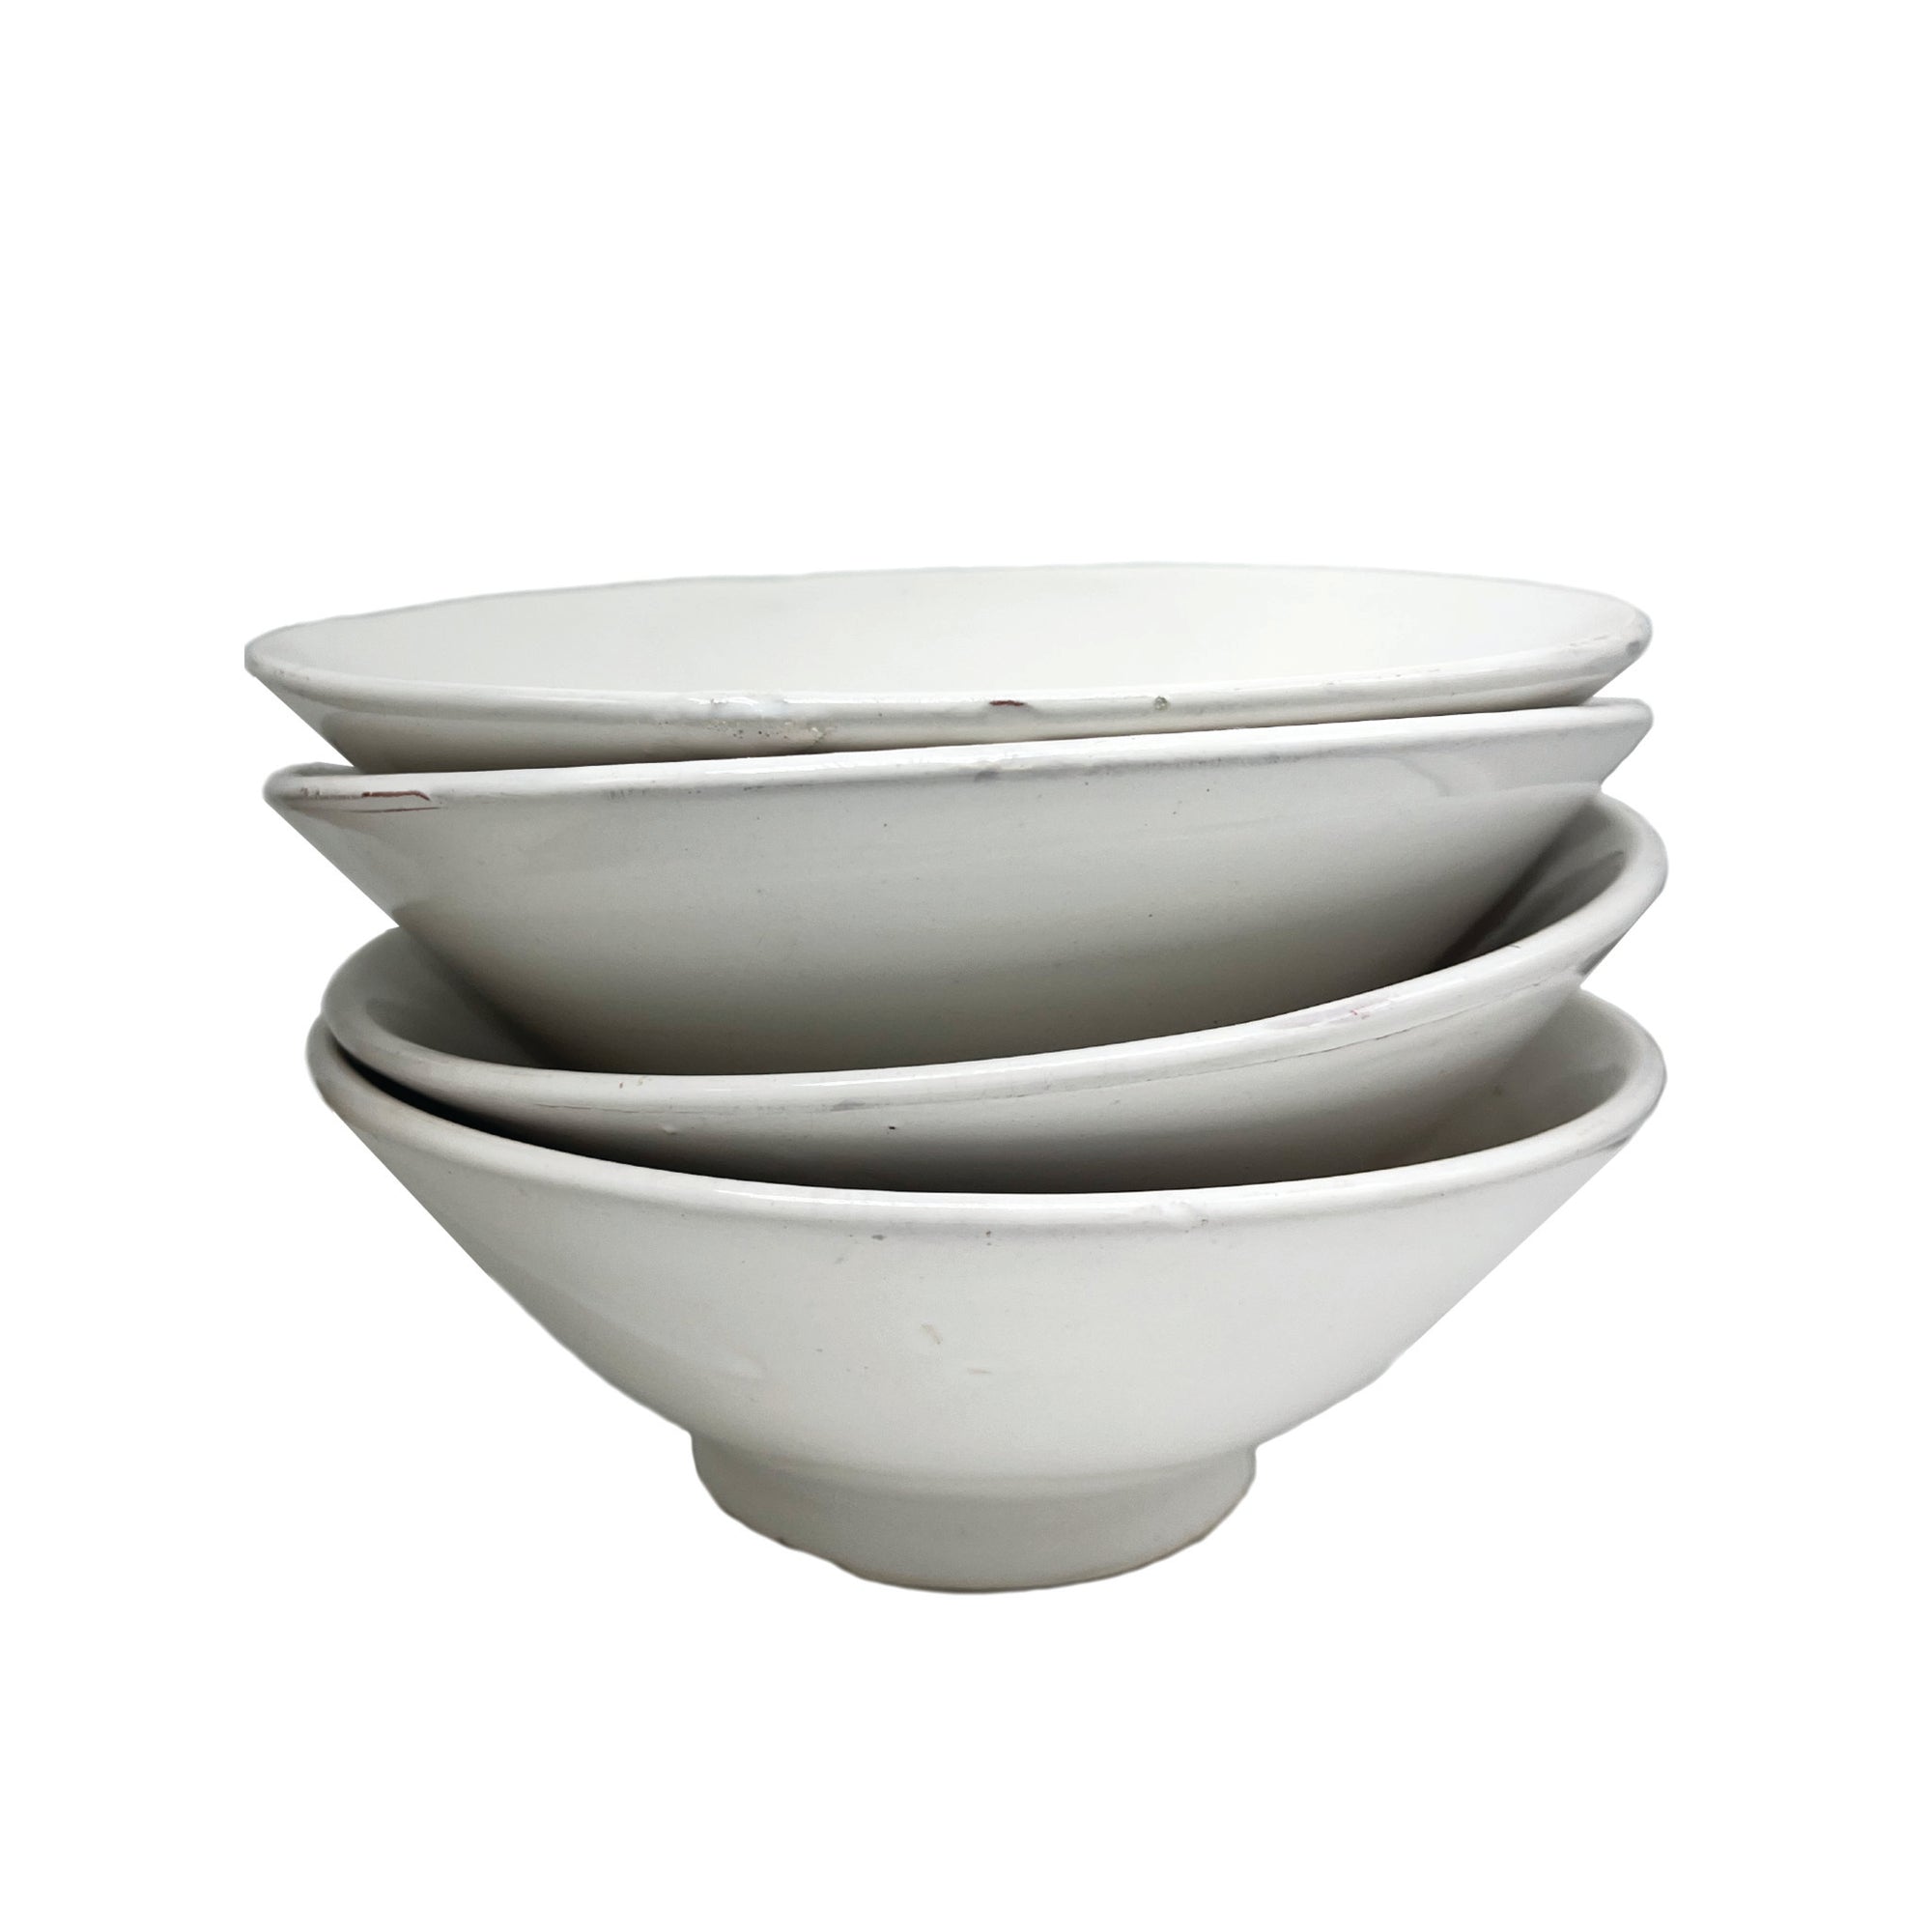 White Ceramic Bowls - Set of 4